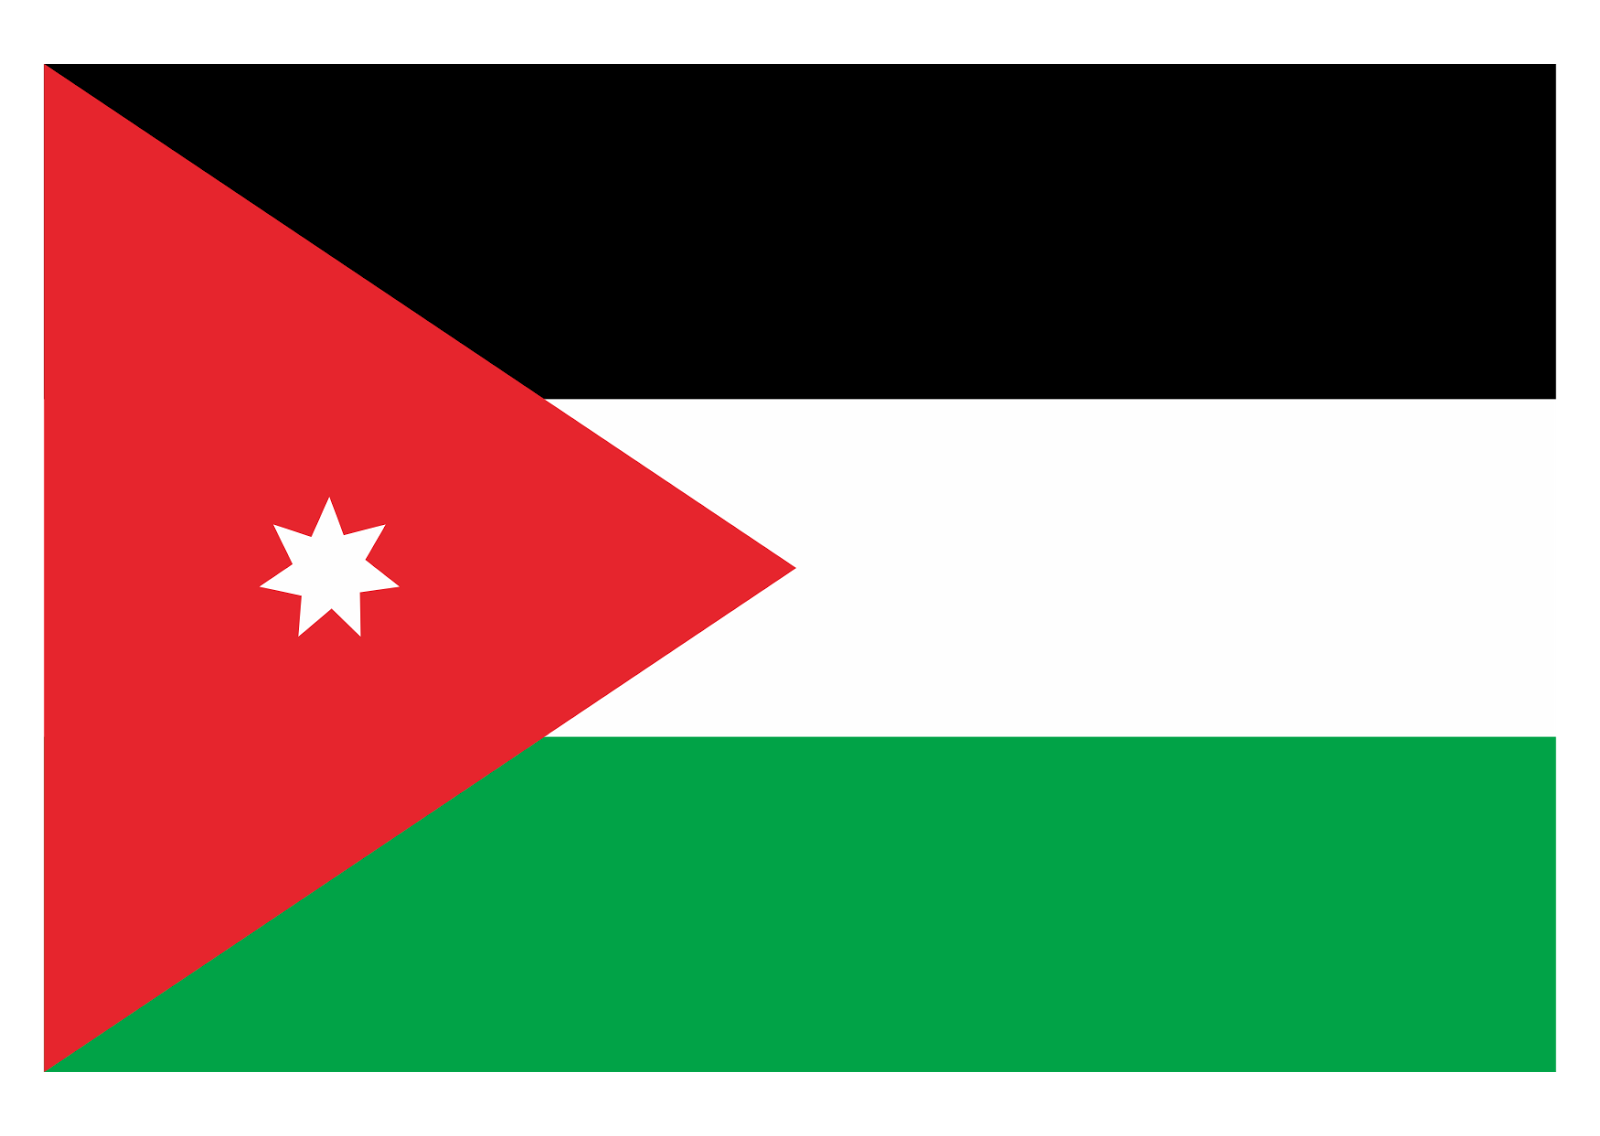 Türk Bayrağı (Flag of Turk